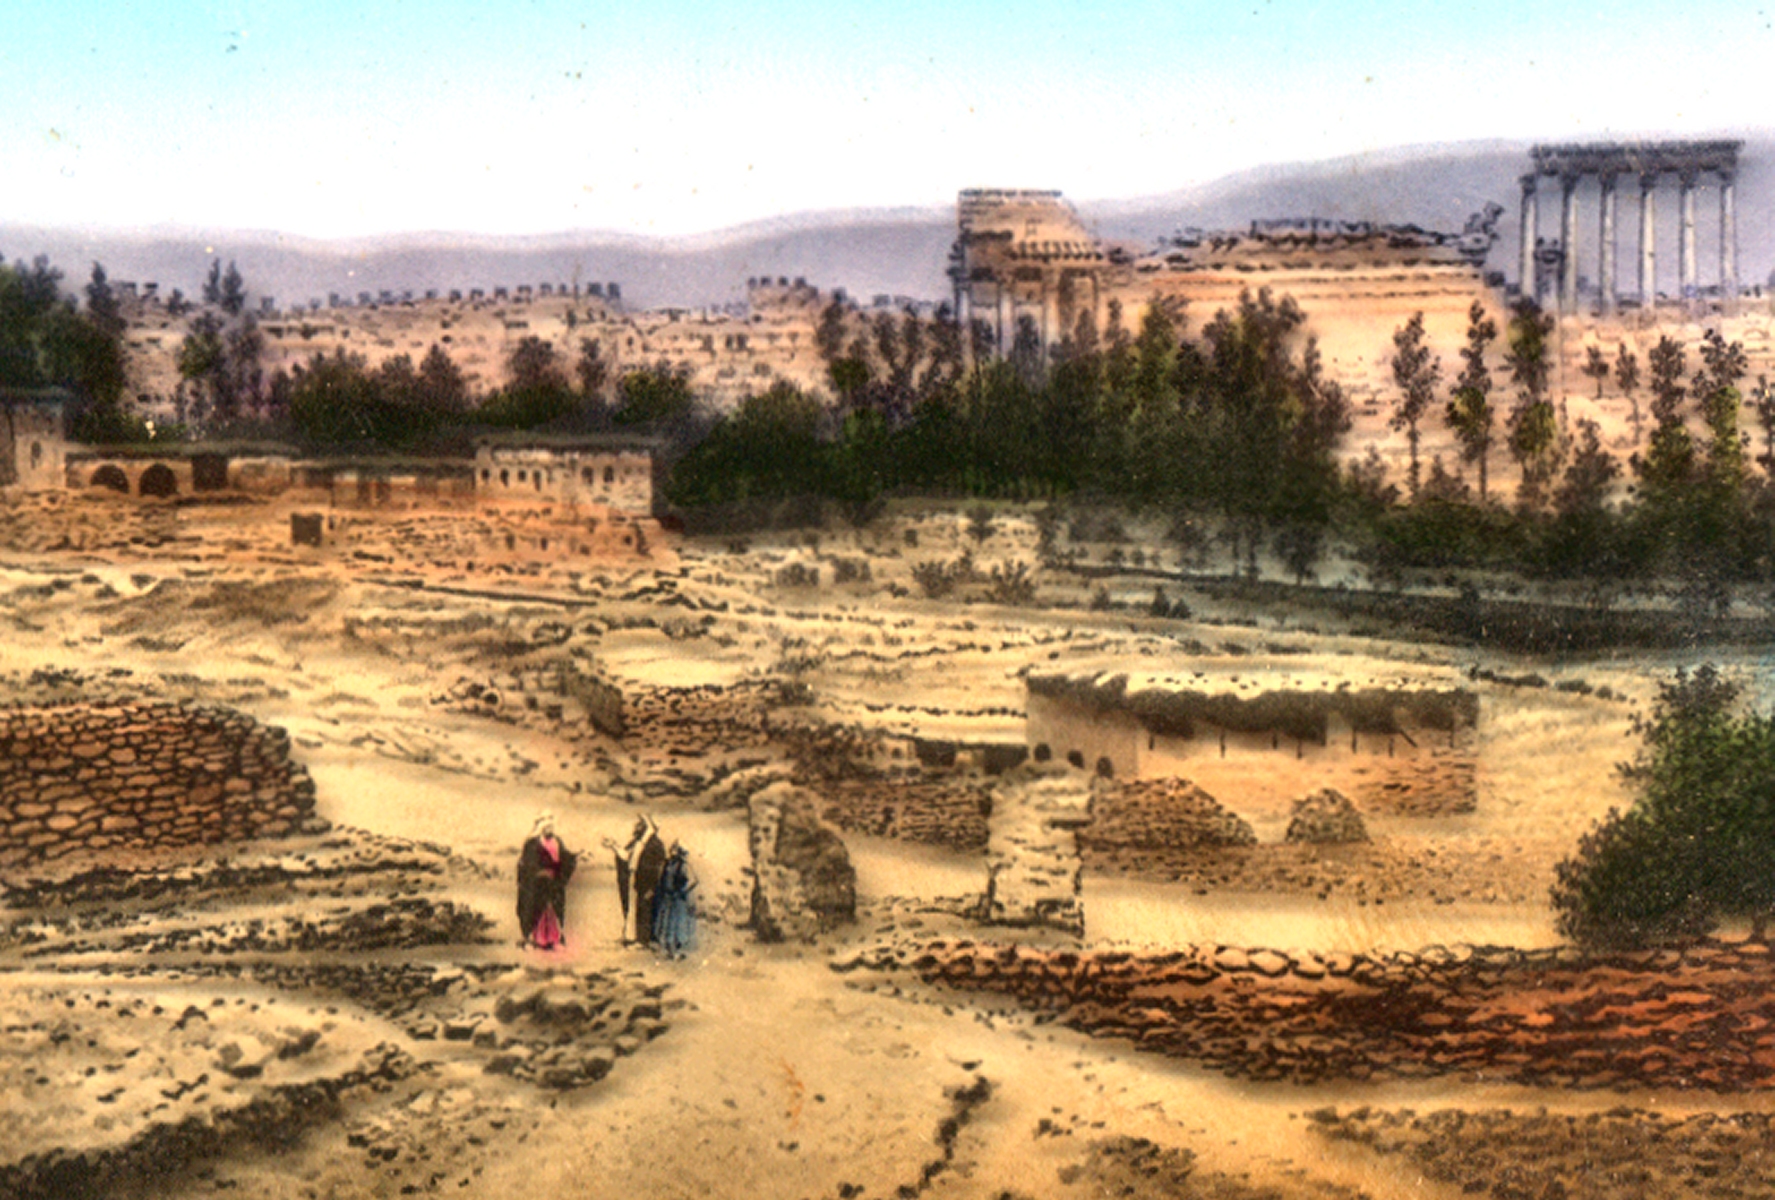 The Ruins of Palmyra